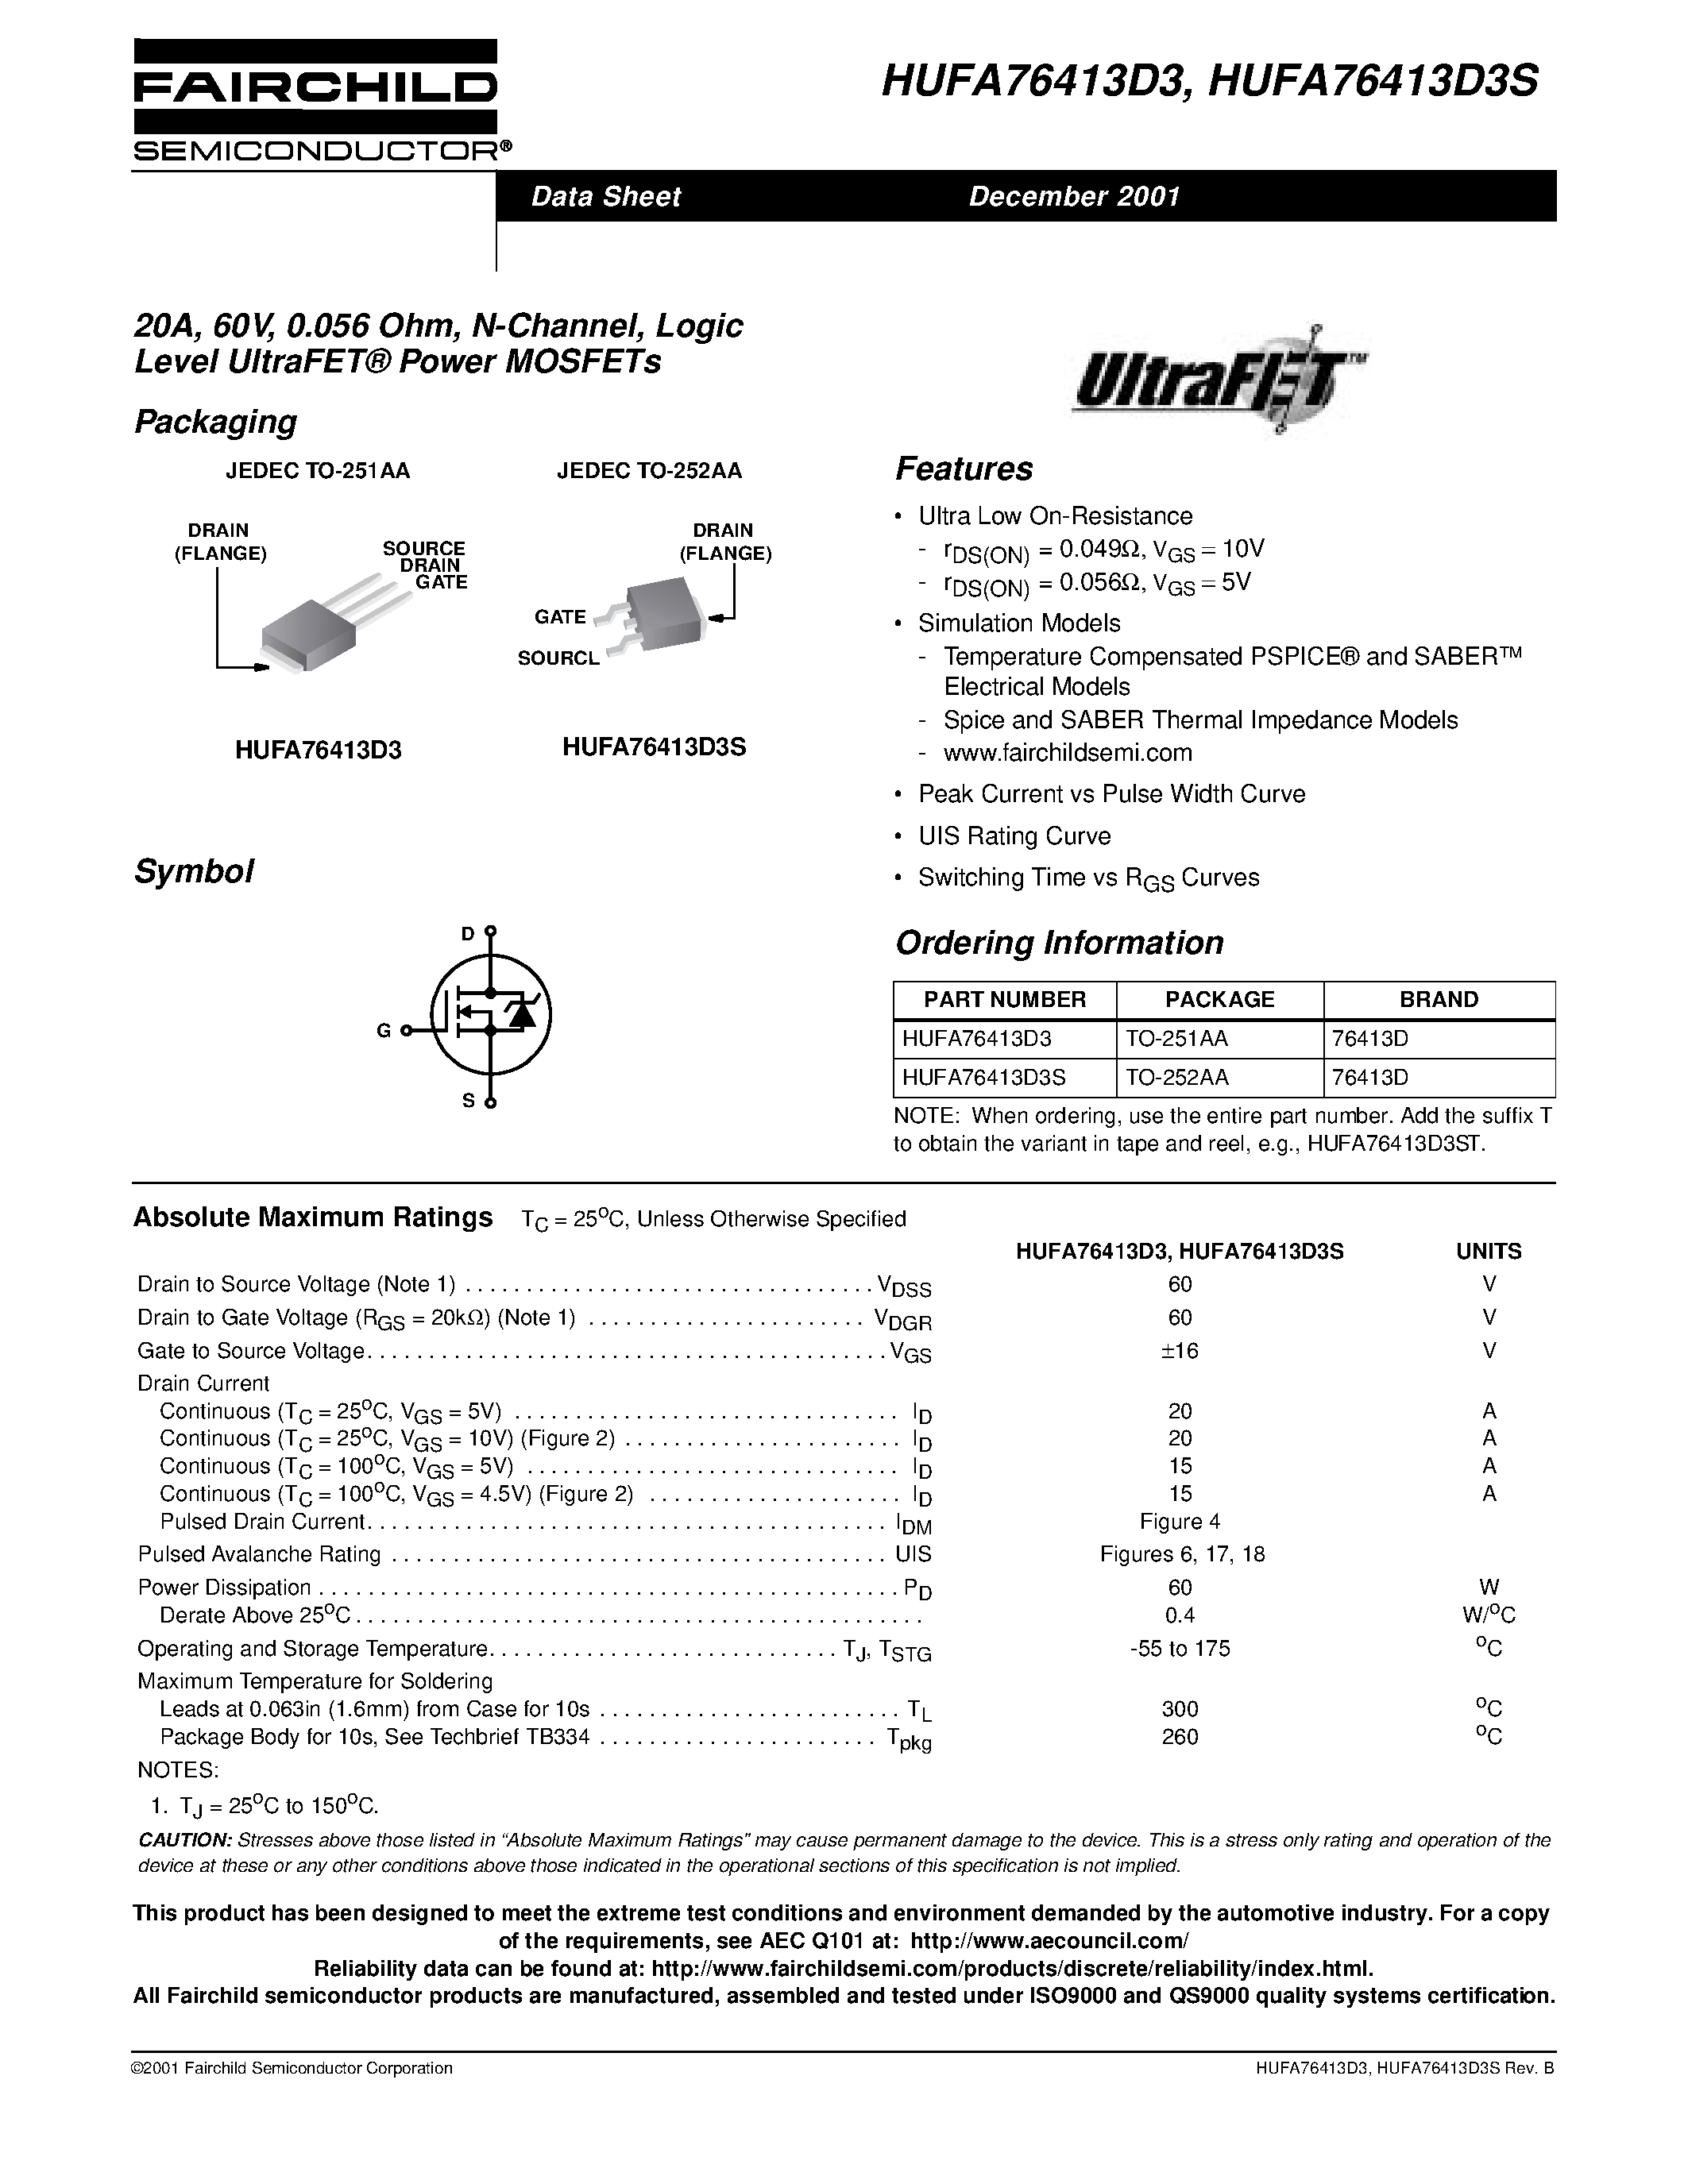 Даташит HUFA76413D3S - 20A/ 60V/ 0.056 Ohm/ N-Channel/ Logic Level UltraFET Power MOSFETs страница 1